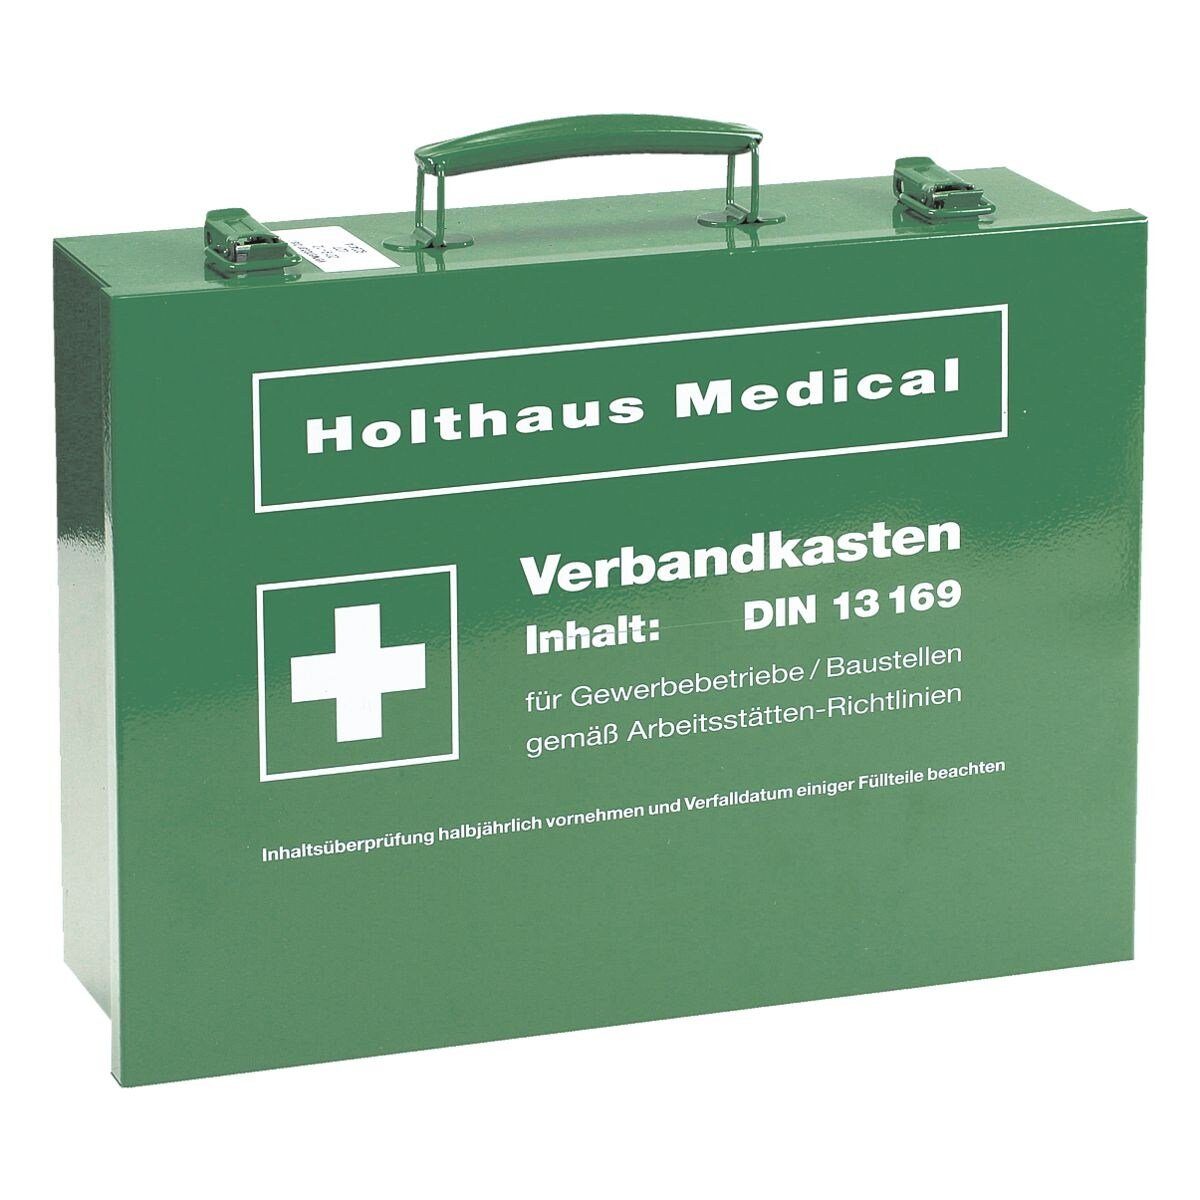 Holthaus Medical Erste-Hilfe-Koffer Stahlblech, inkl. 13169 DIN Füllsortiment nach